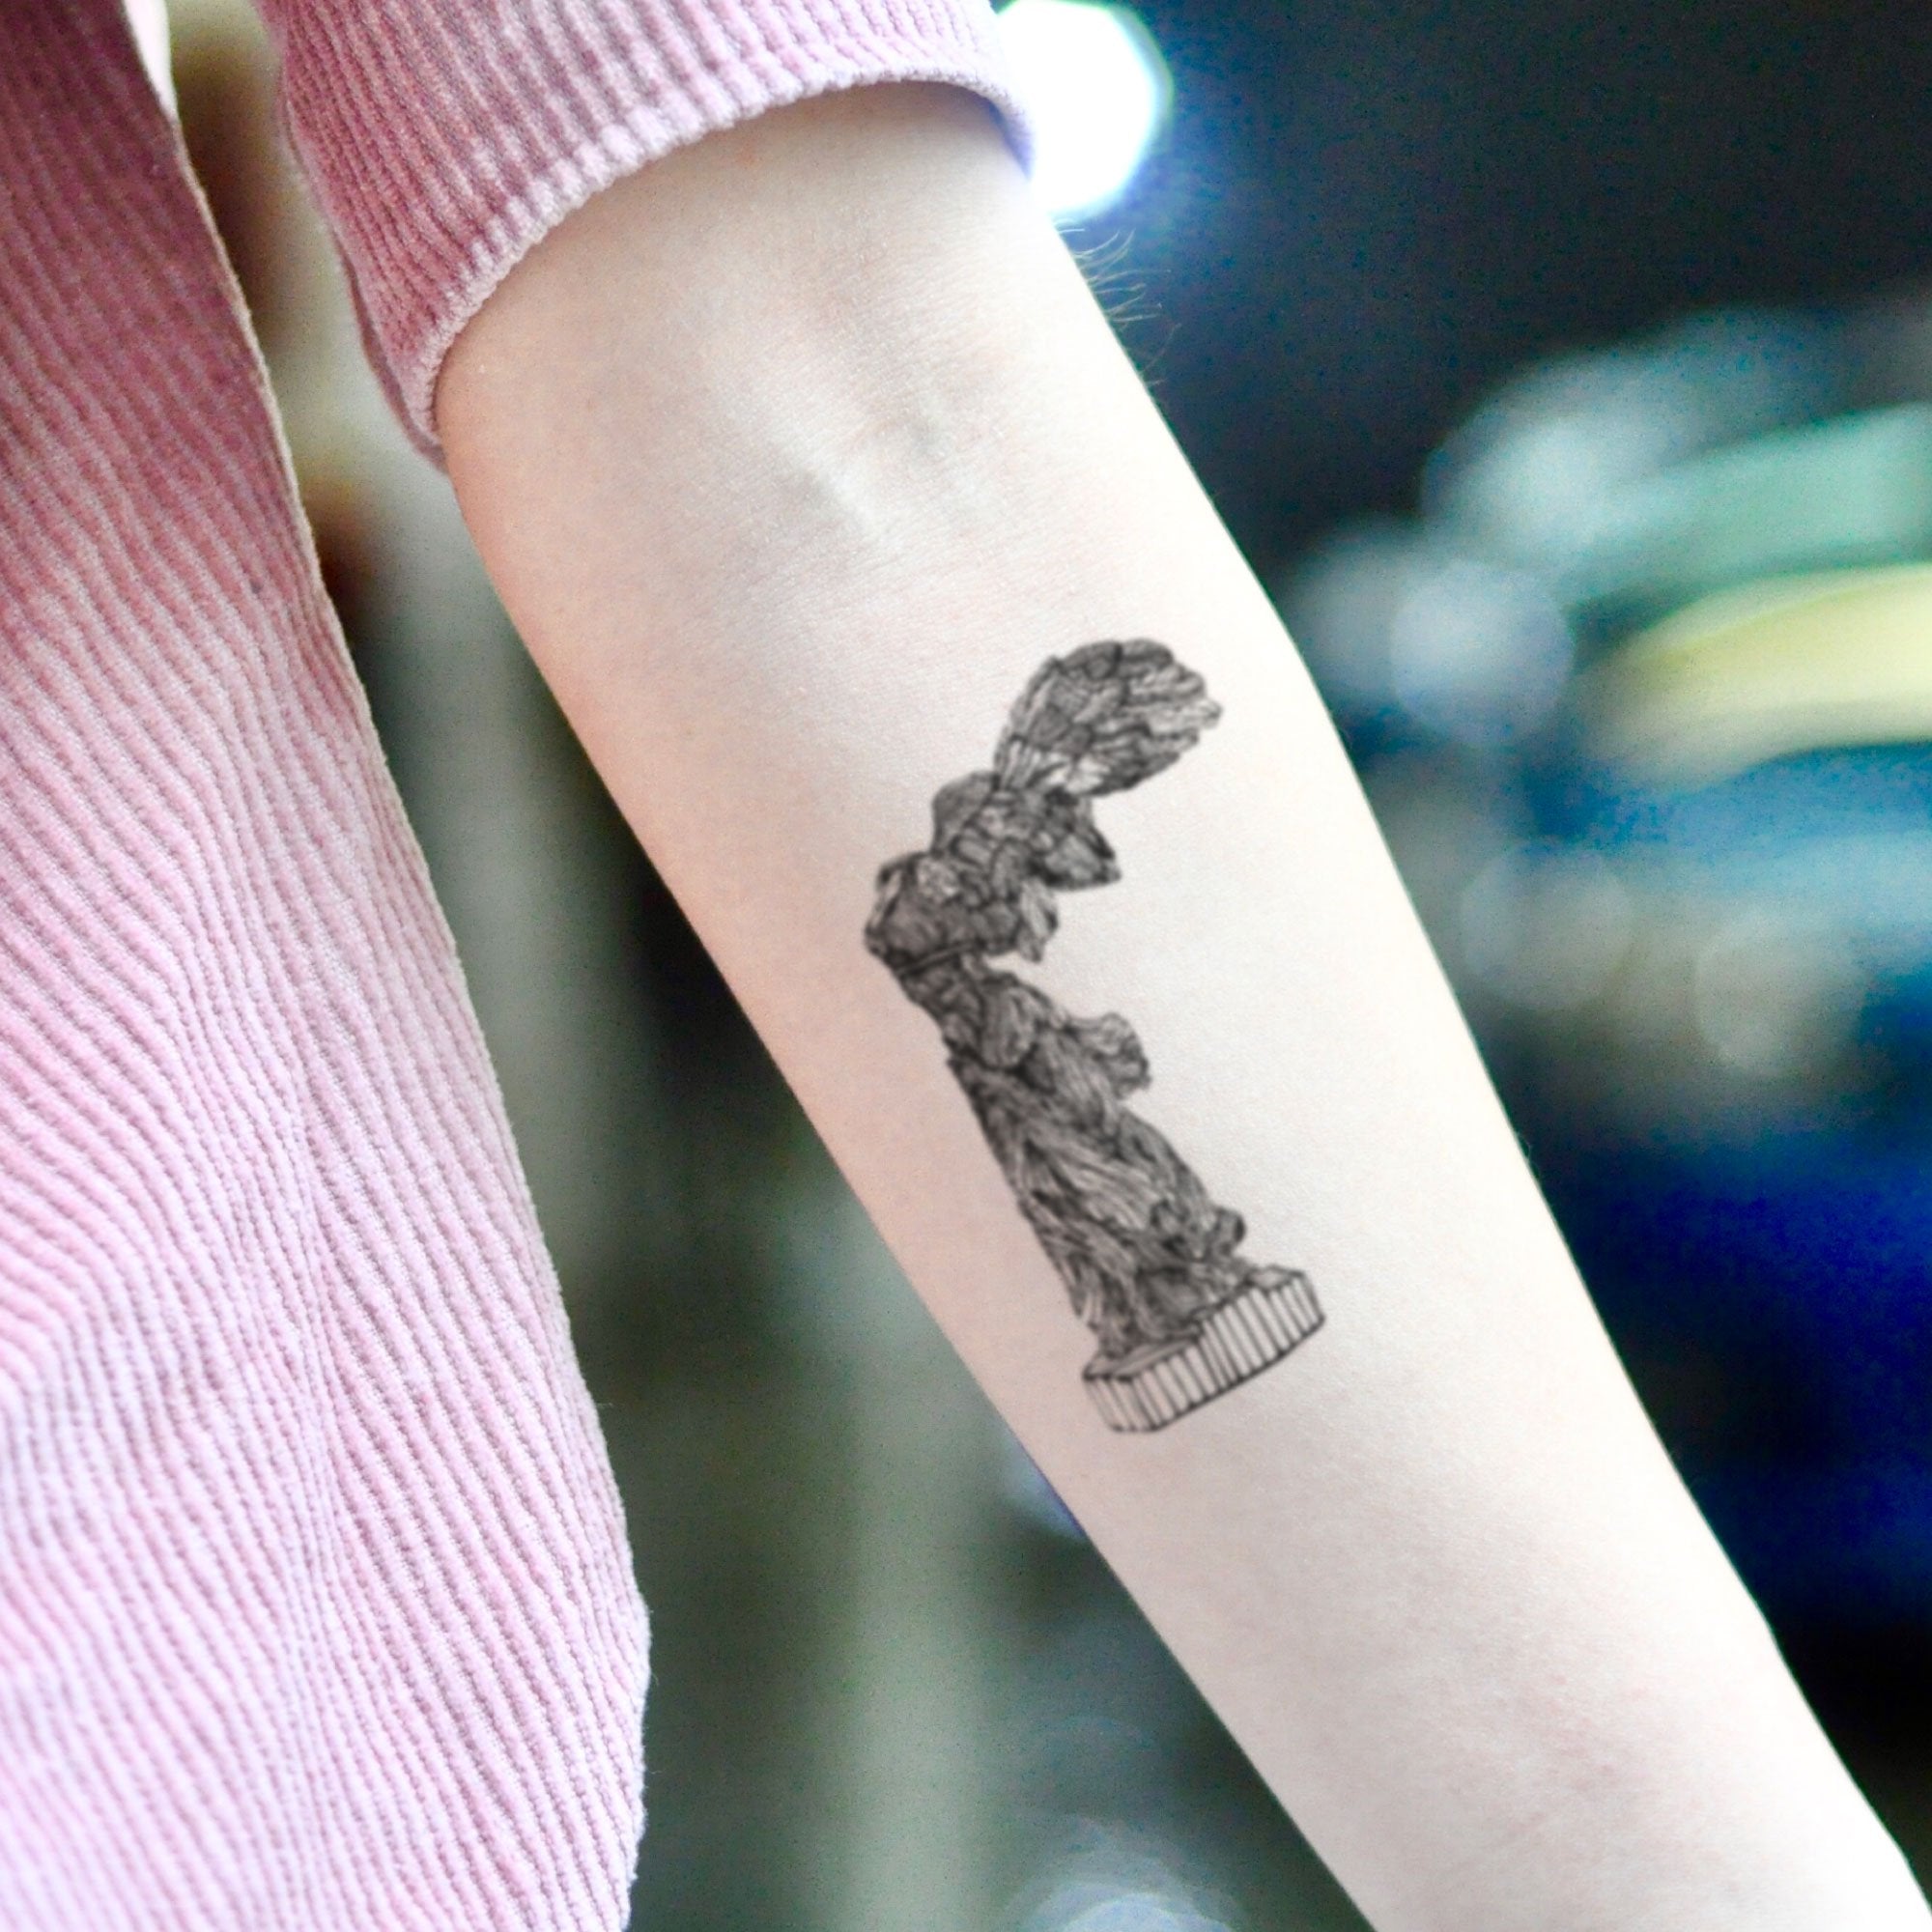 Winged Victory Samothrace Temporary Tattoo Sticker -